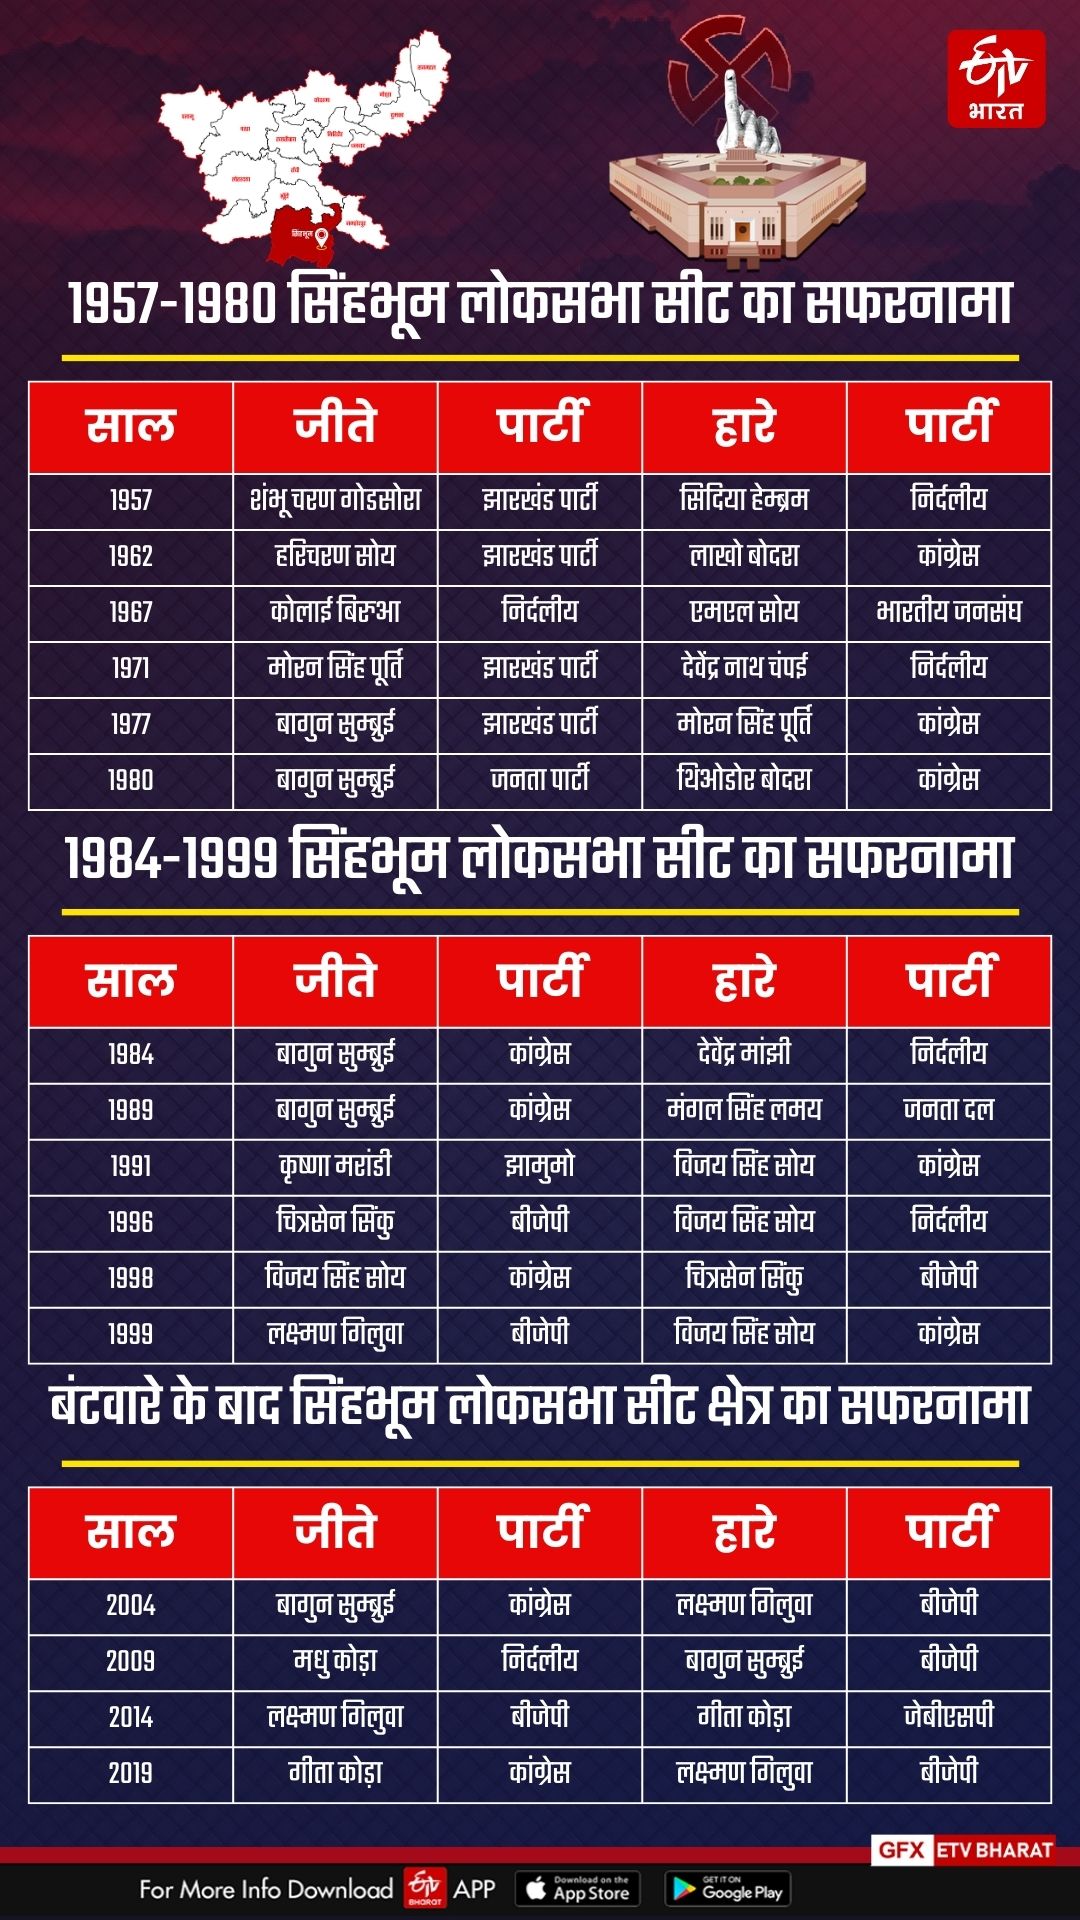 Know Singbhum Lok Sabha constituency through graphics